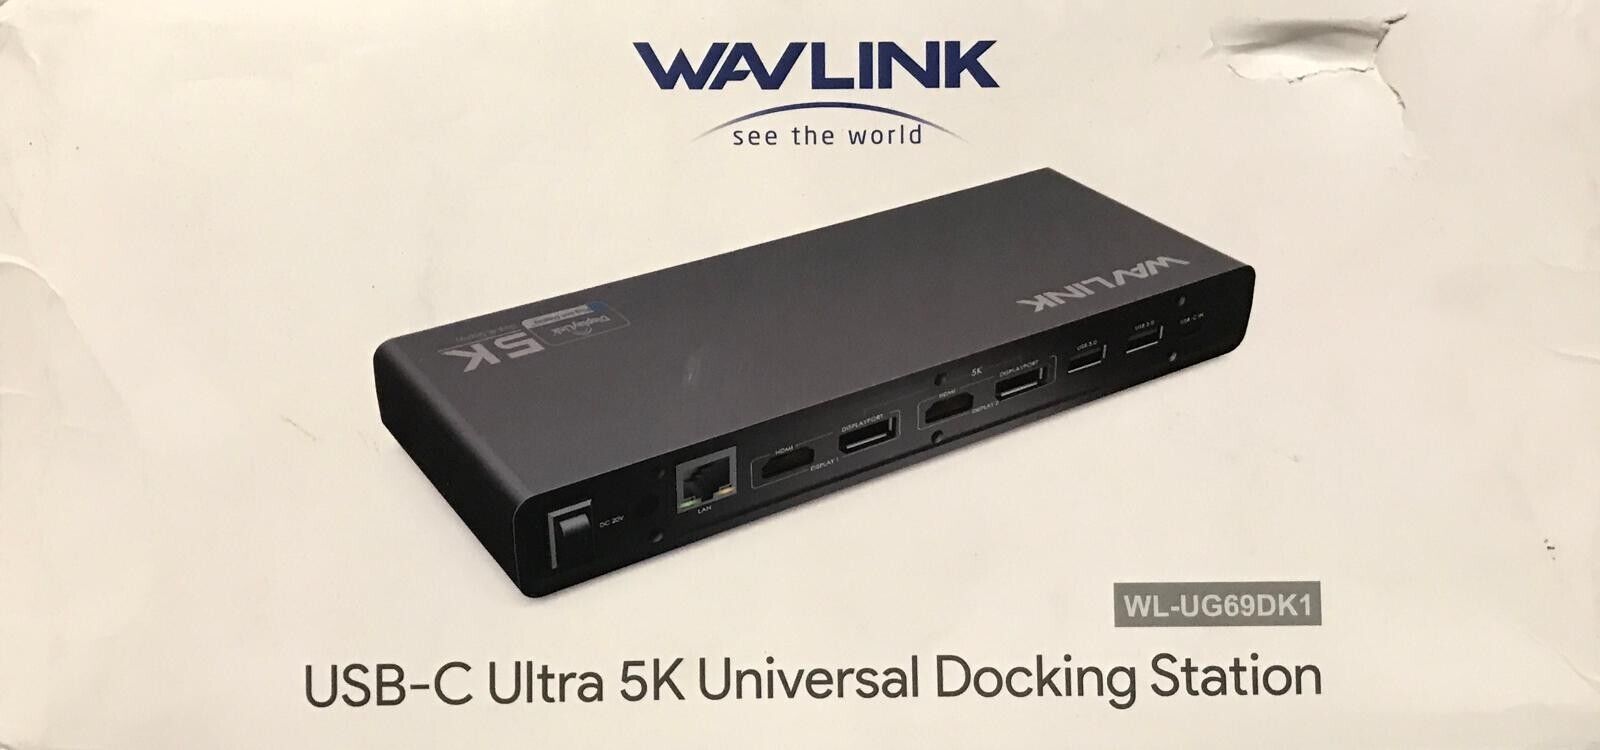 WAVLINK wl-ug69dk1 USB-C Dual 4K Docking Station with Power Supply ONLY